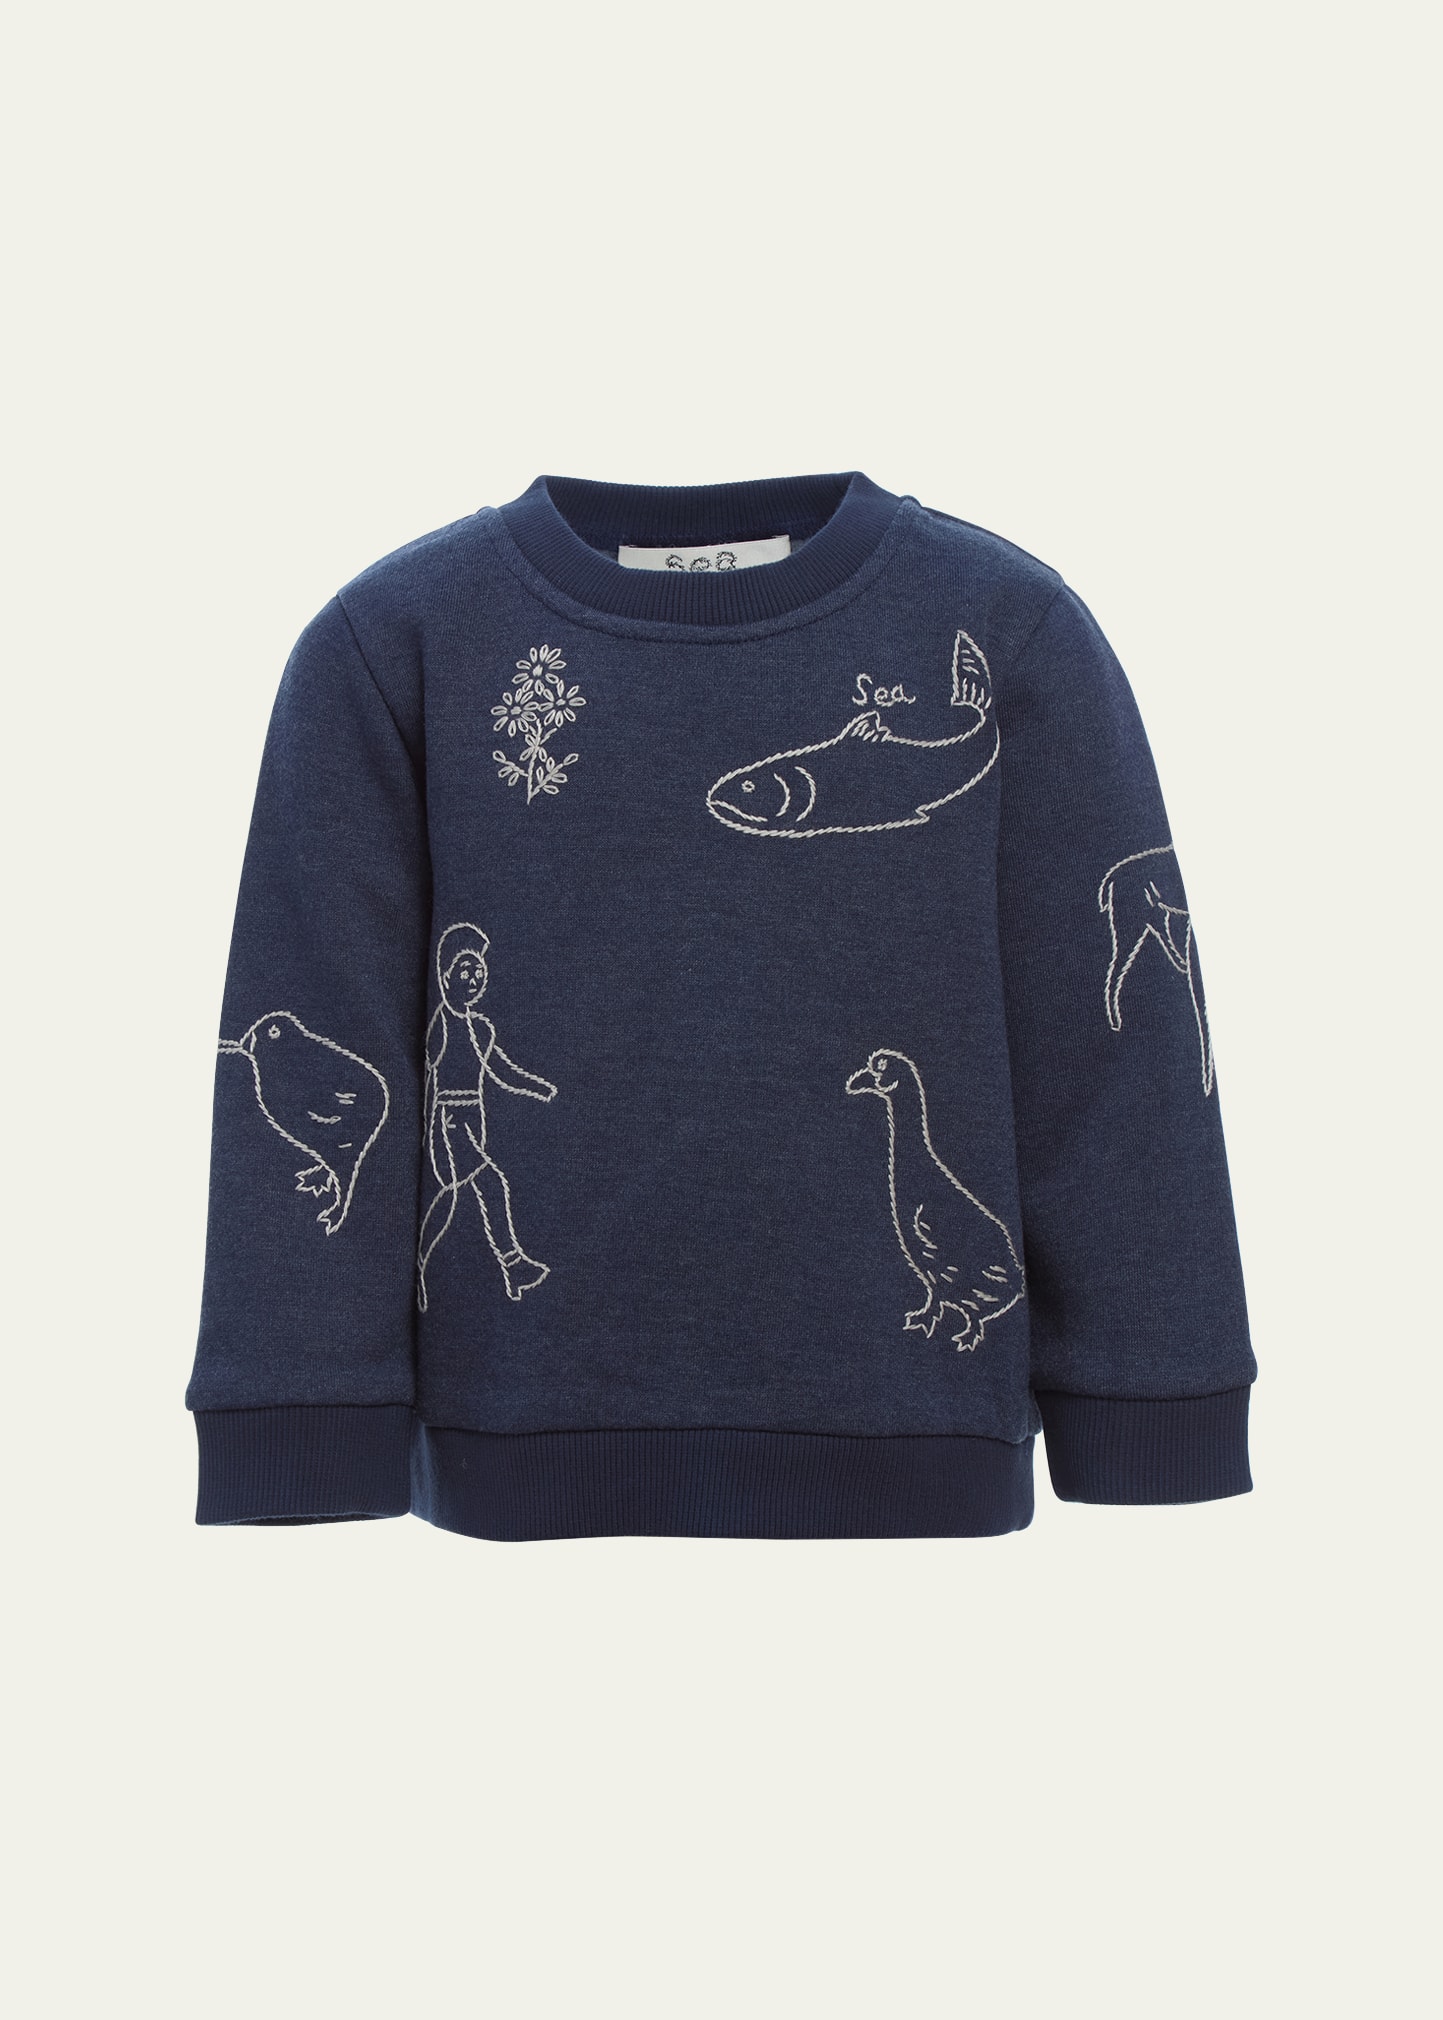 Sea Kids' Girl's Embroidered Sweatshirt In Blue